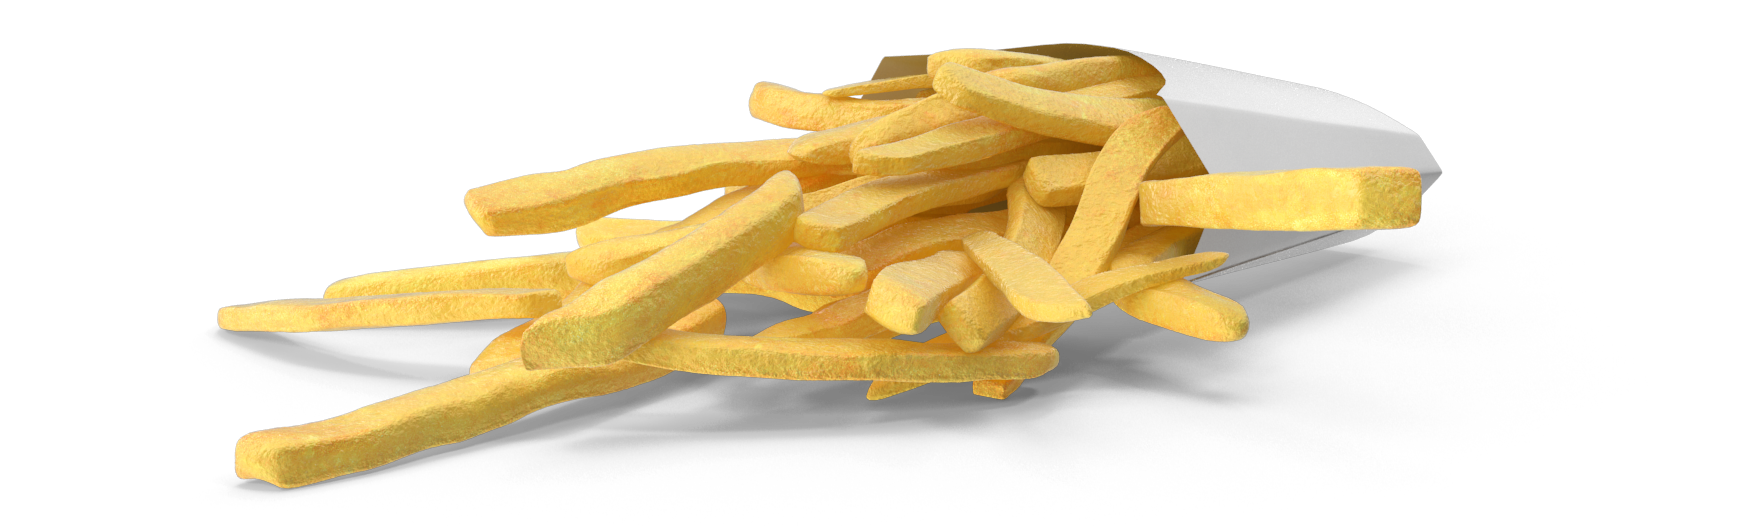 Fries Data